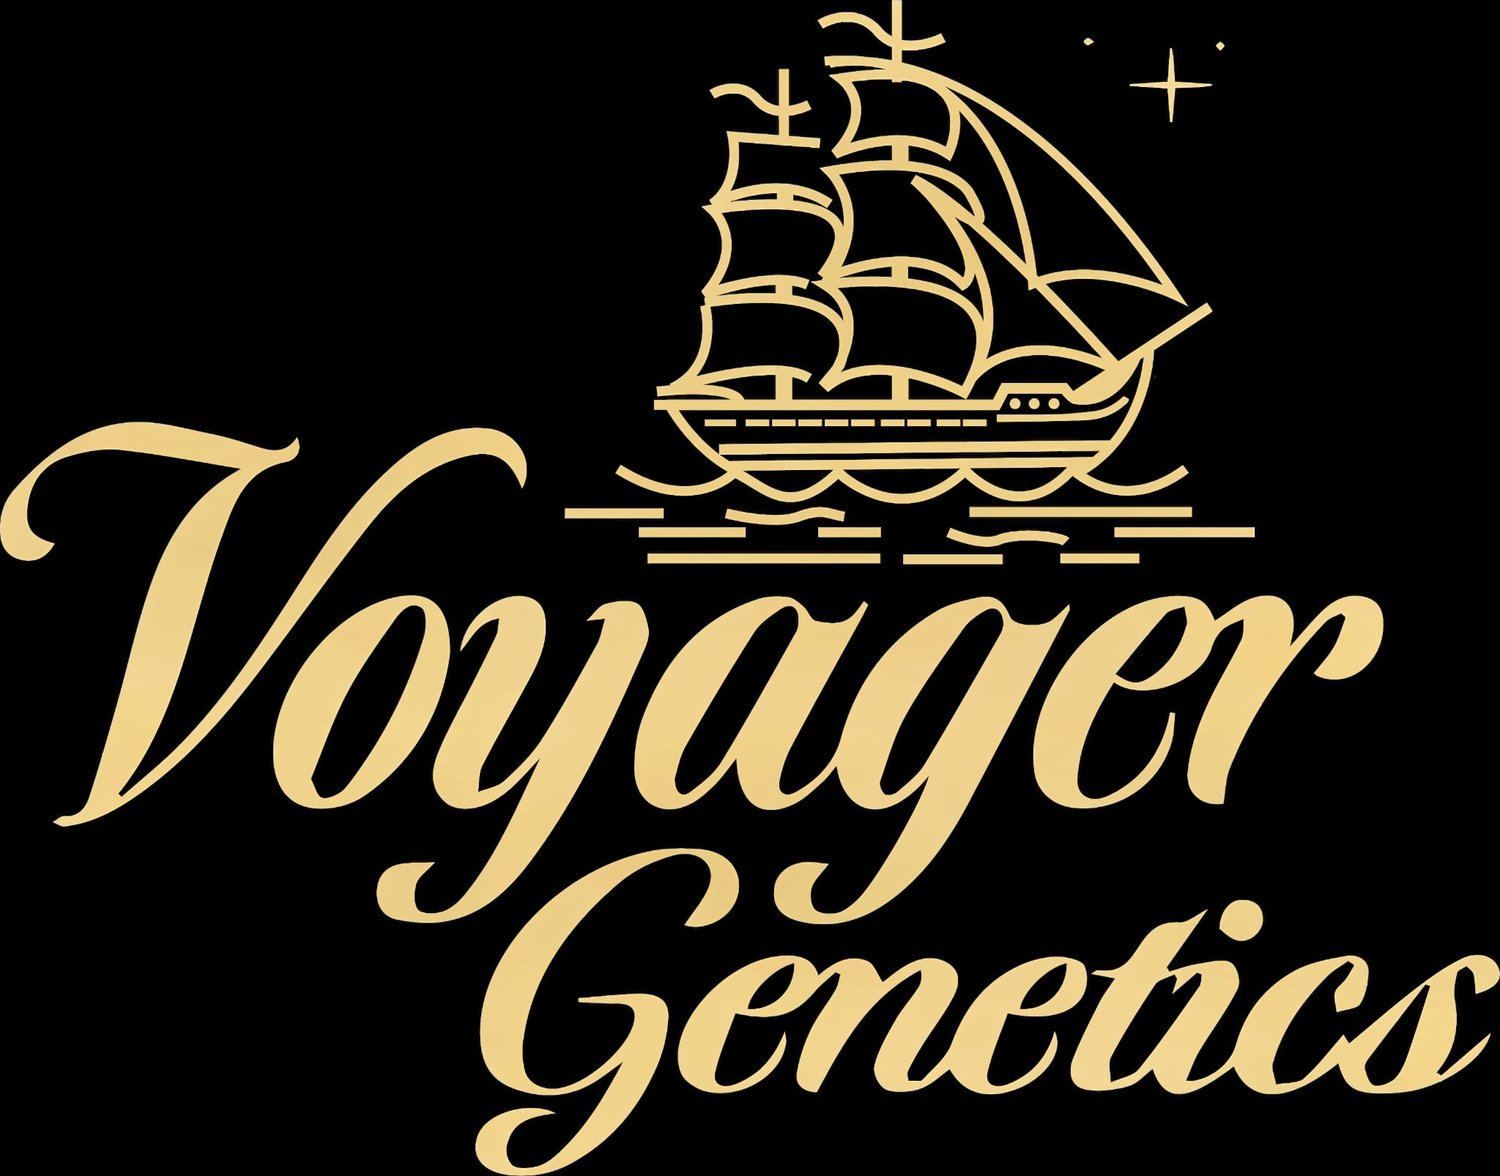 Voyager Genetics